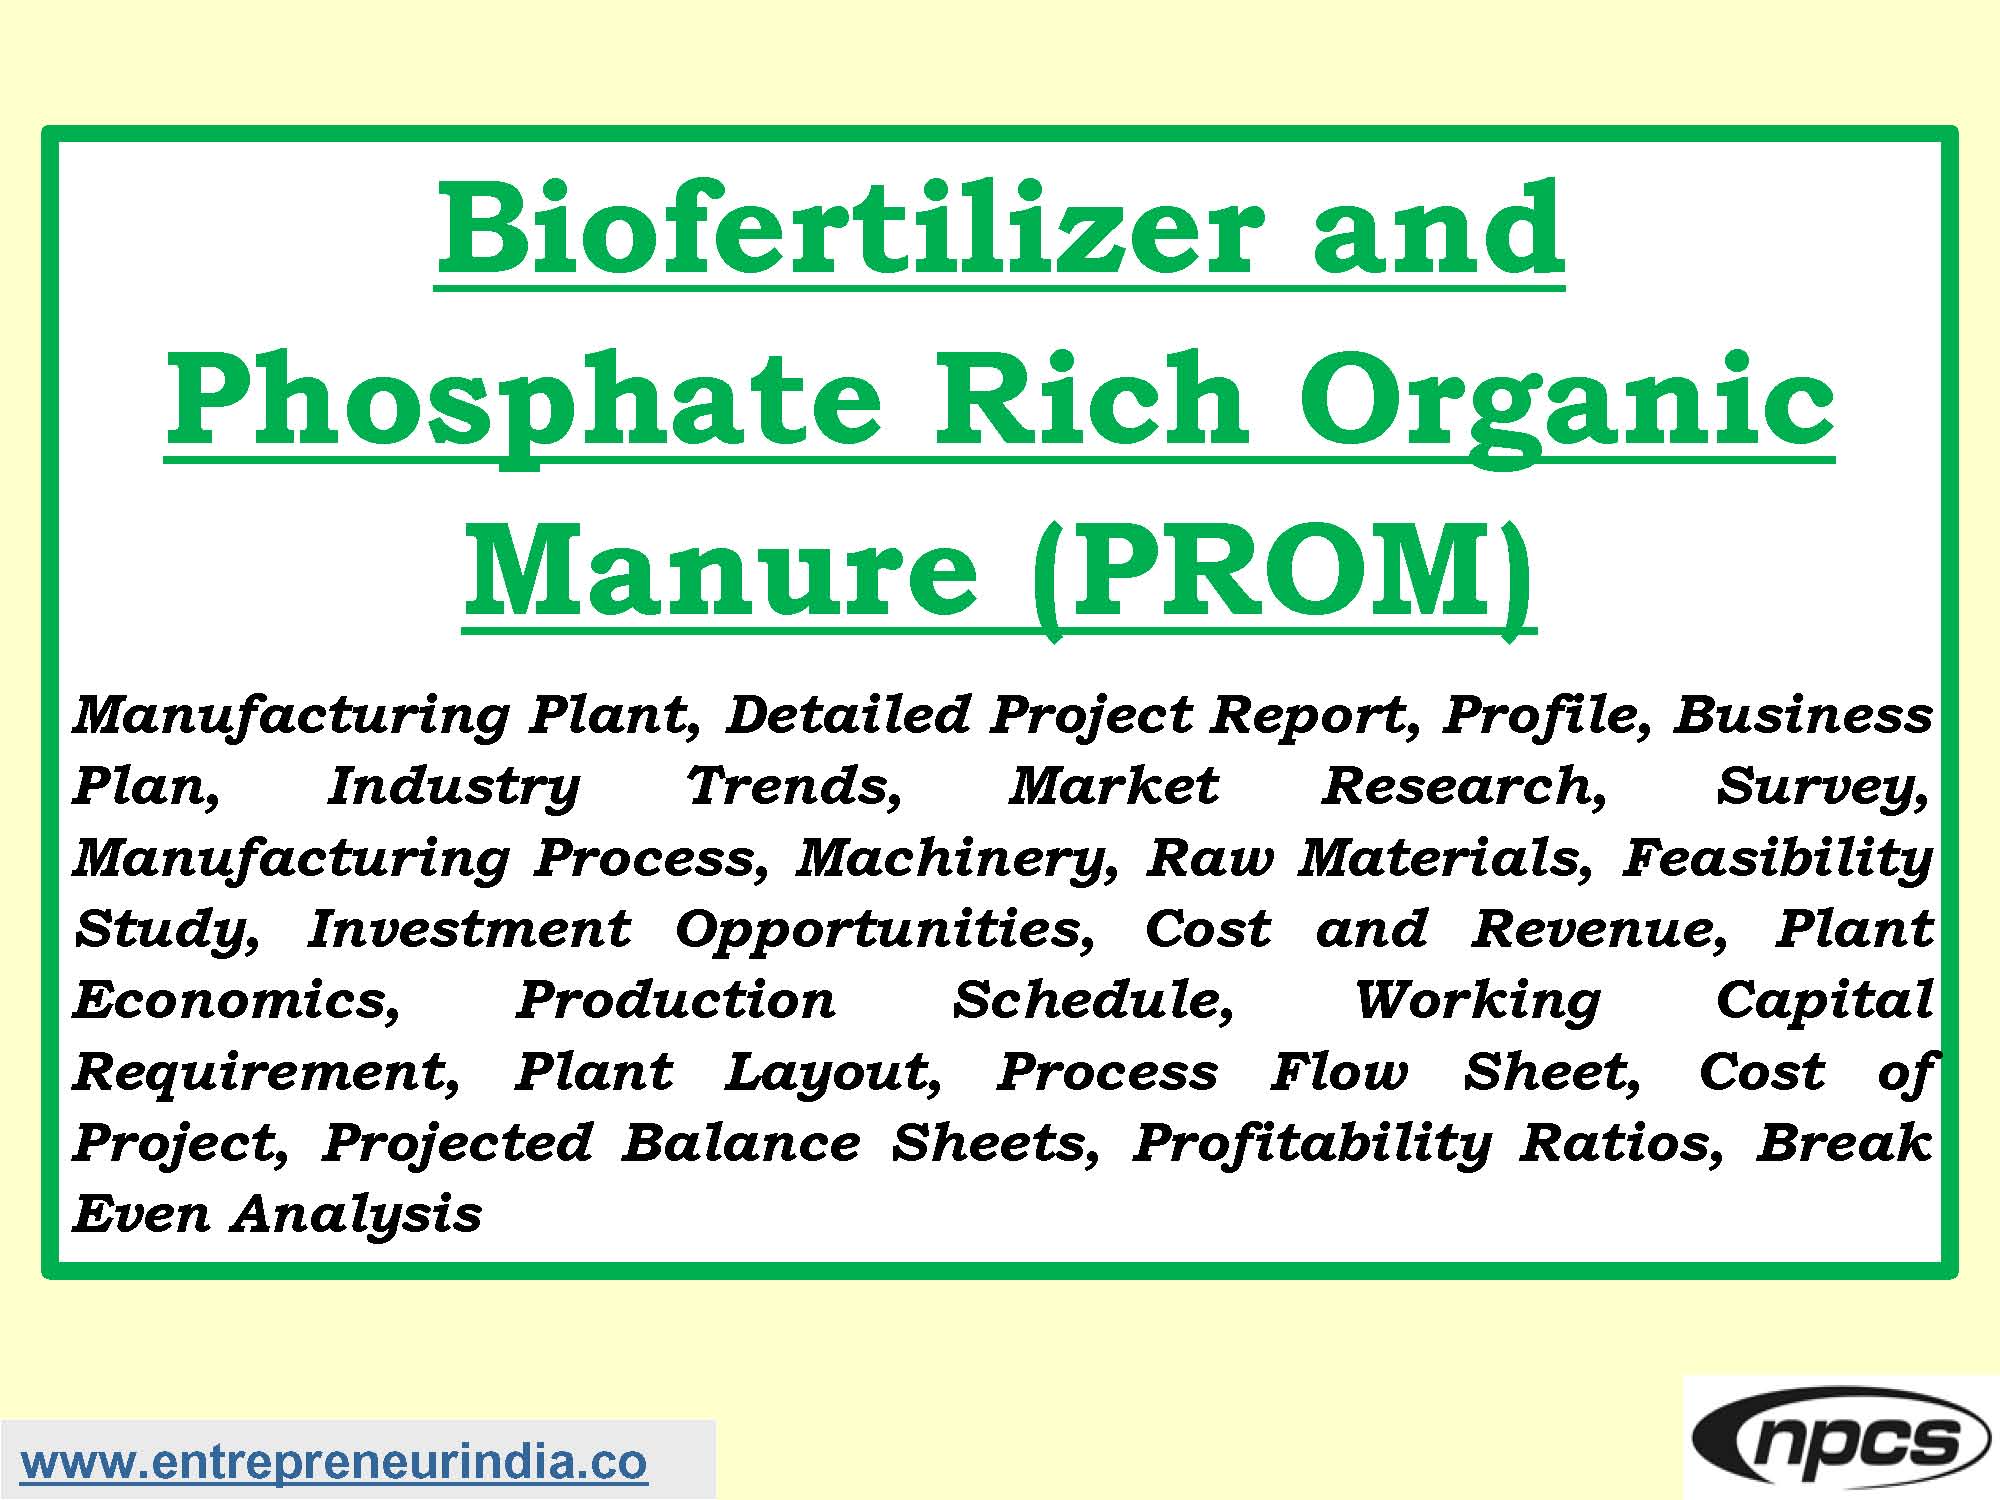 Biofertilizer and Phosphate Rich Organic Manure (PROM)